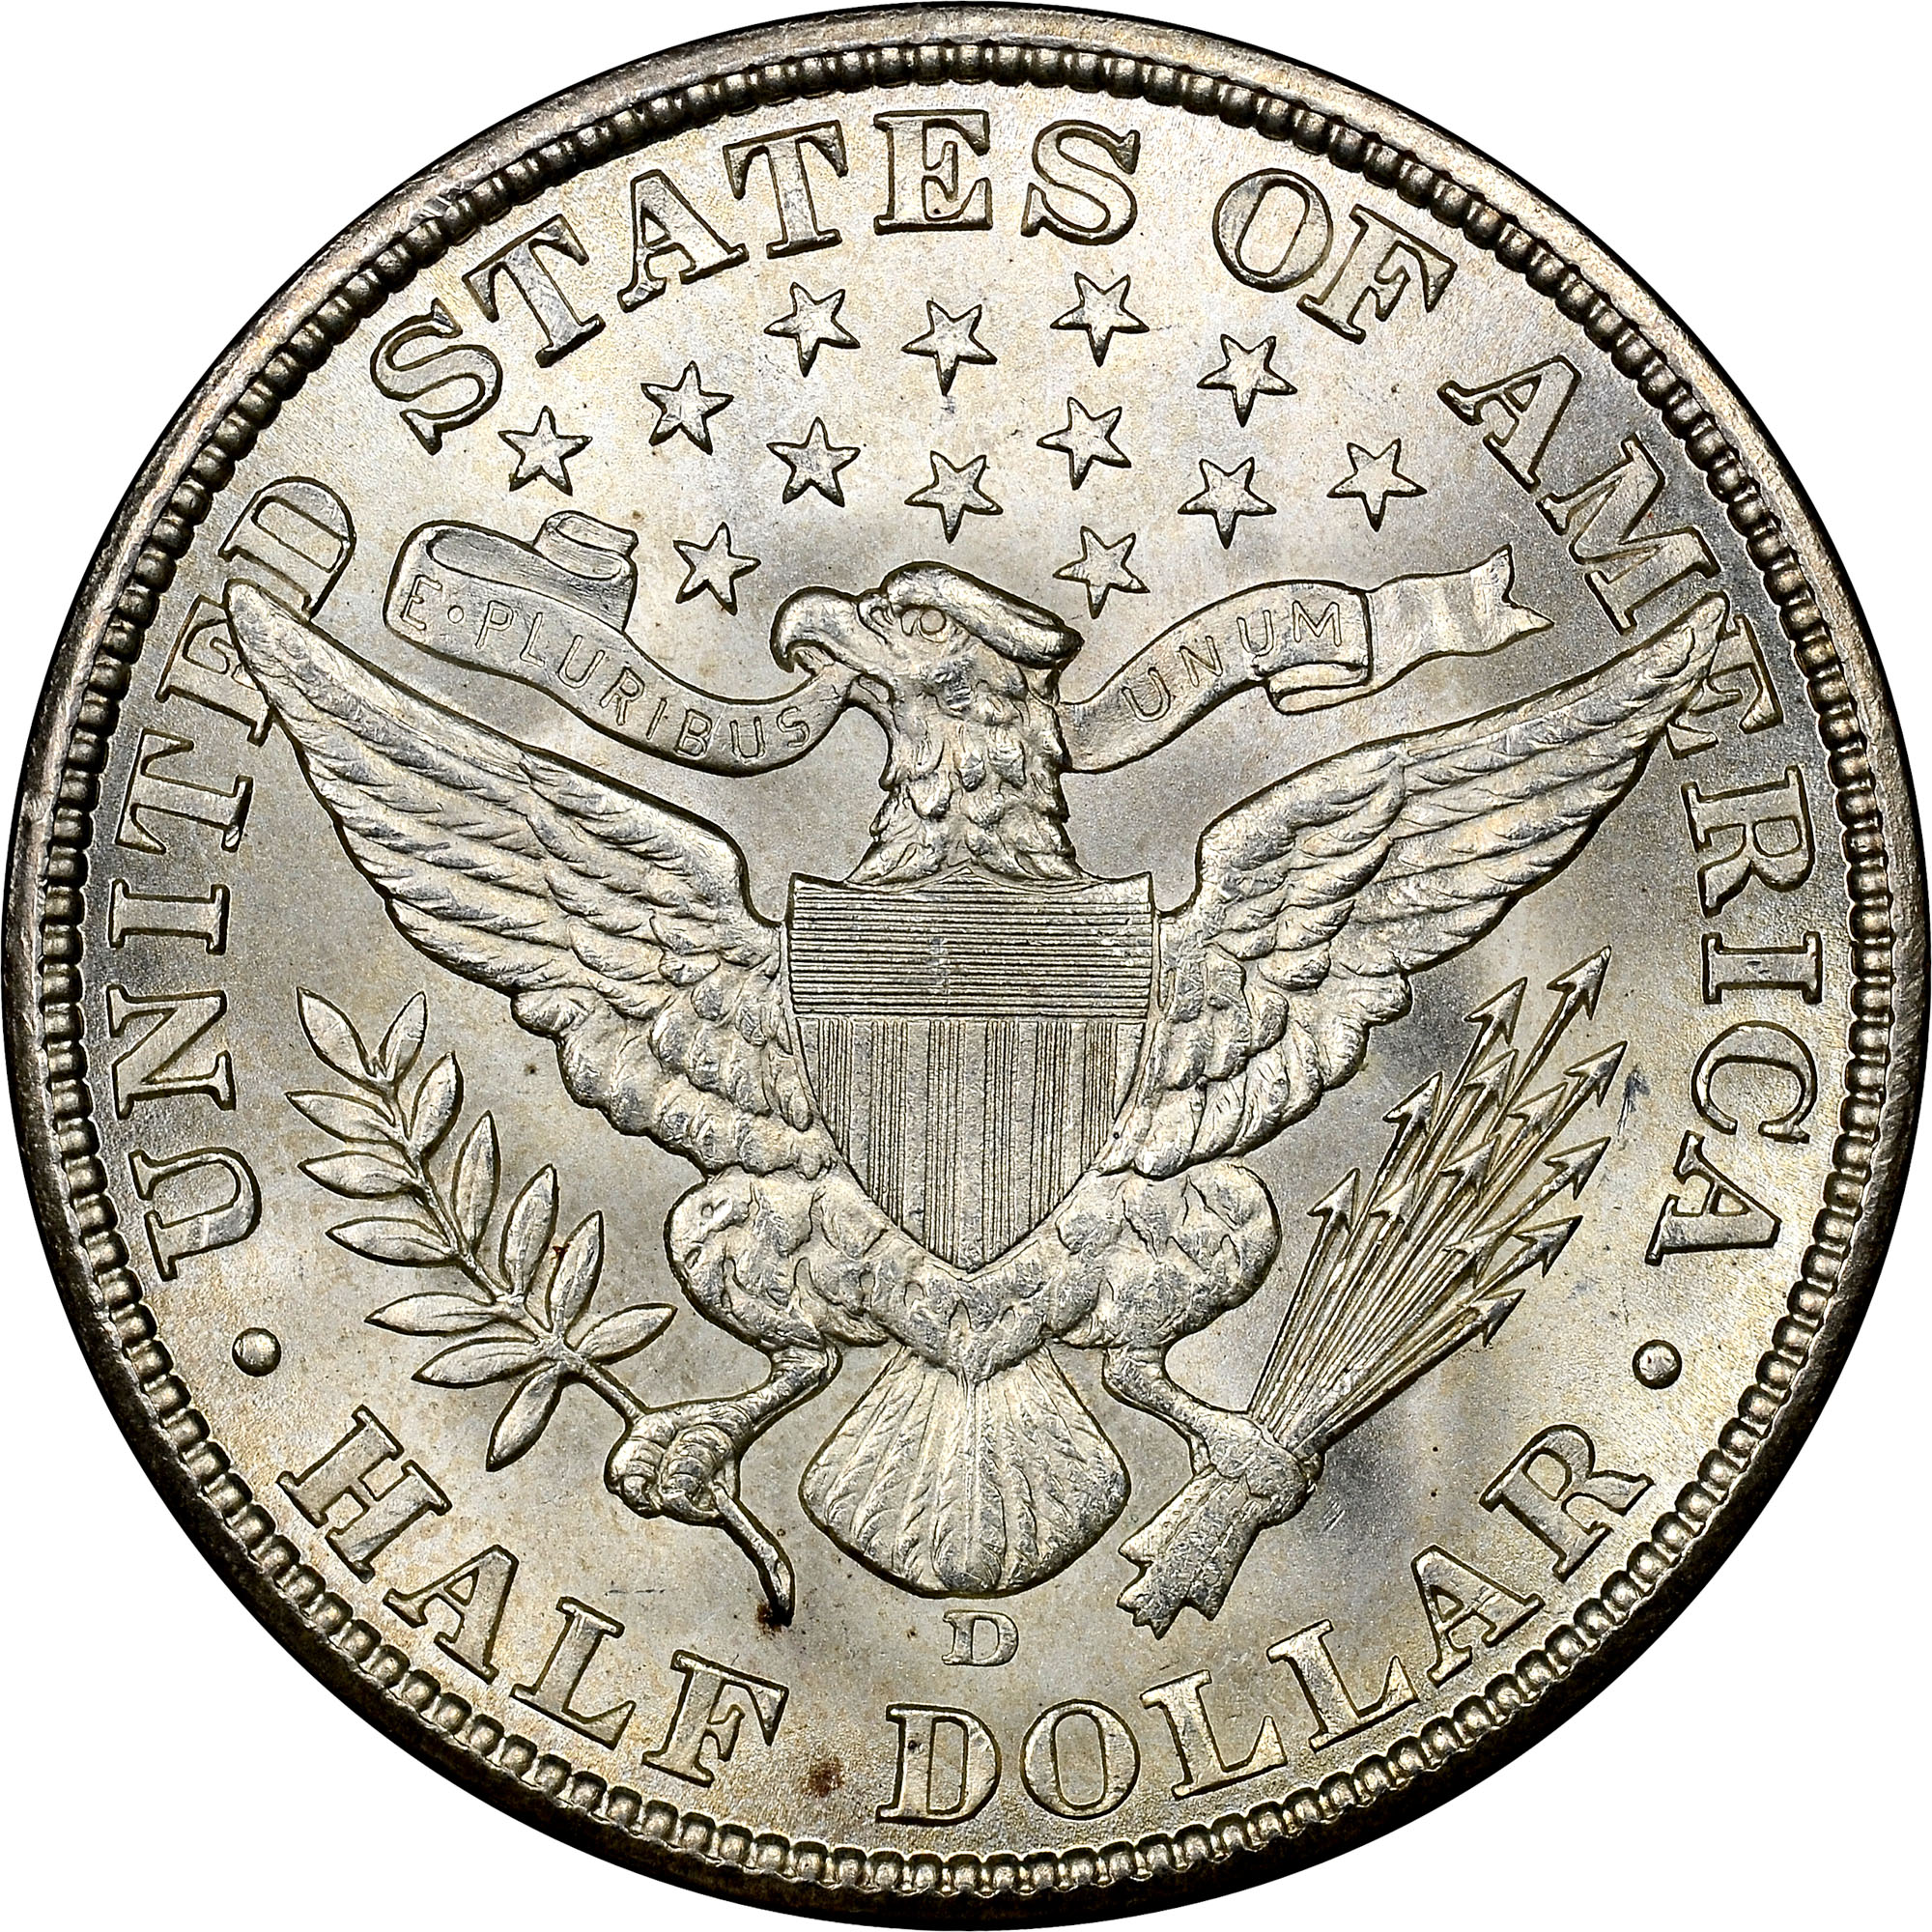 U.S. Silver Coin Melt Values | Silver Dollar Melt Value | NGC